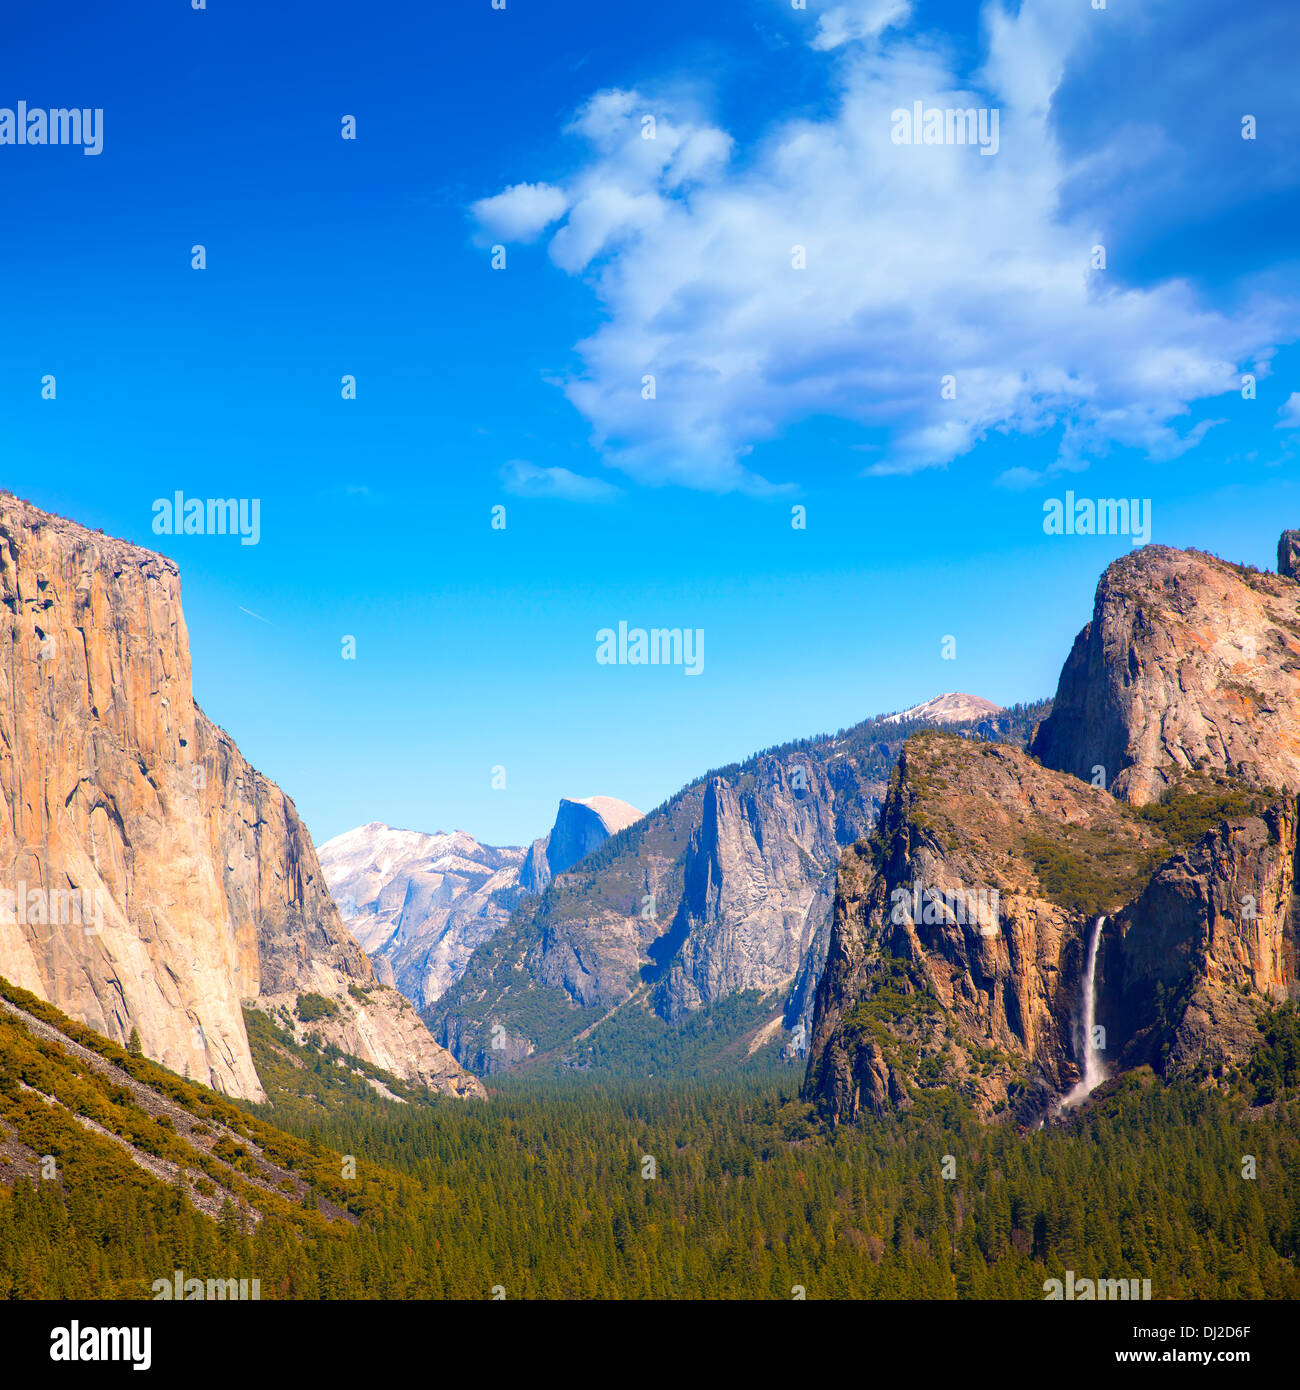 Yosemite el Capitan and Half Dome in California National Parks US Stock Photo